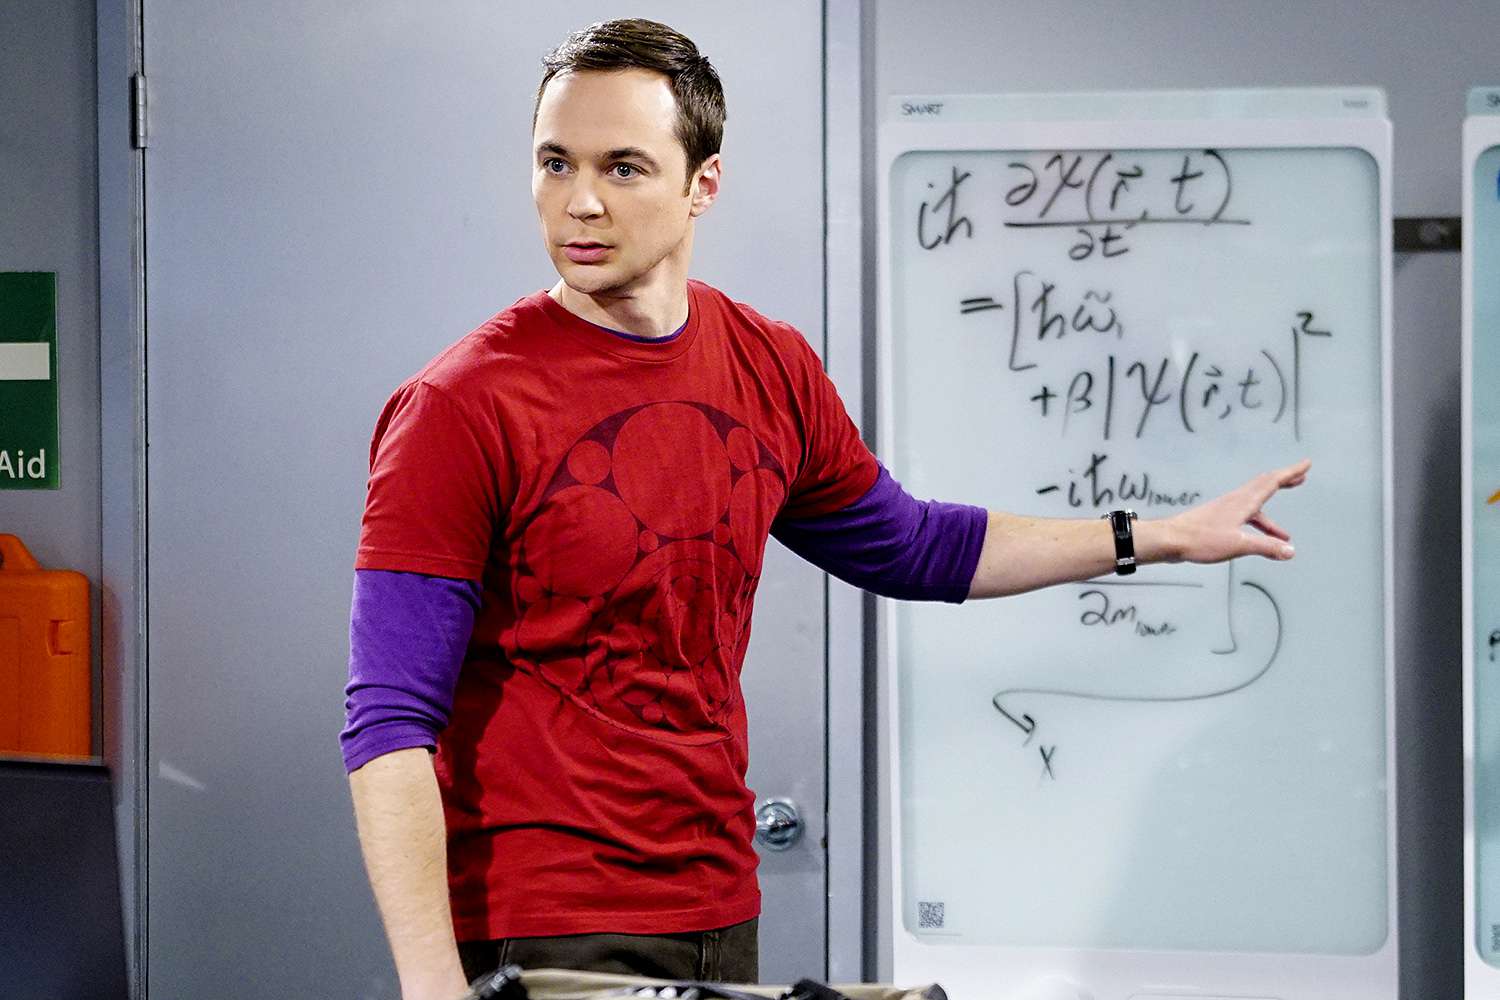 Jim Parsons as Sheldon Cooper wearing a red shirt